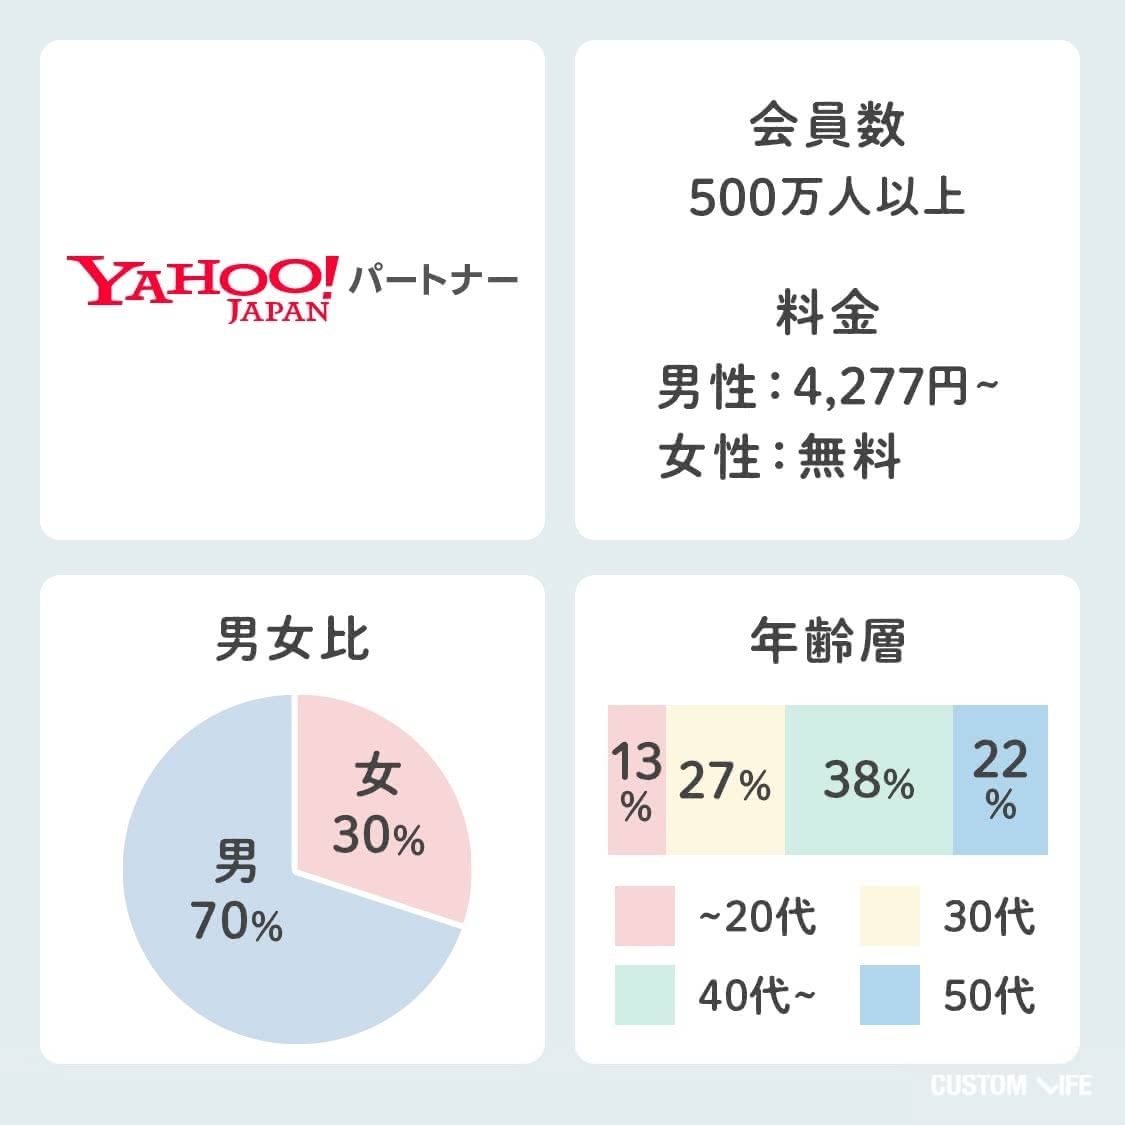 Yahoo!パートナー会員データ